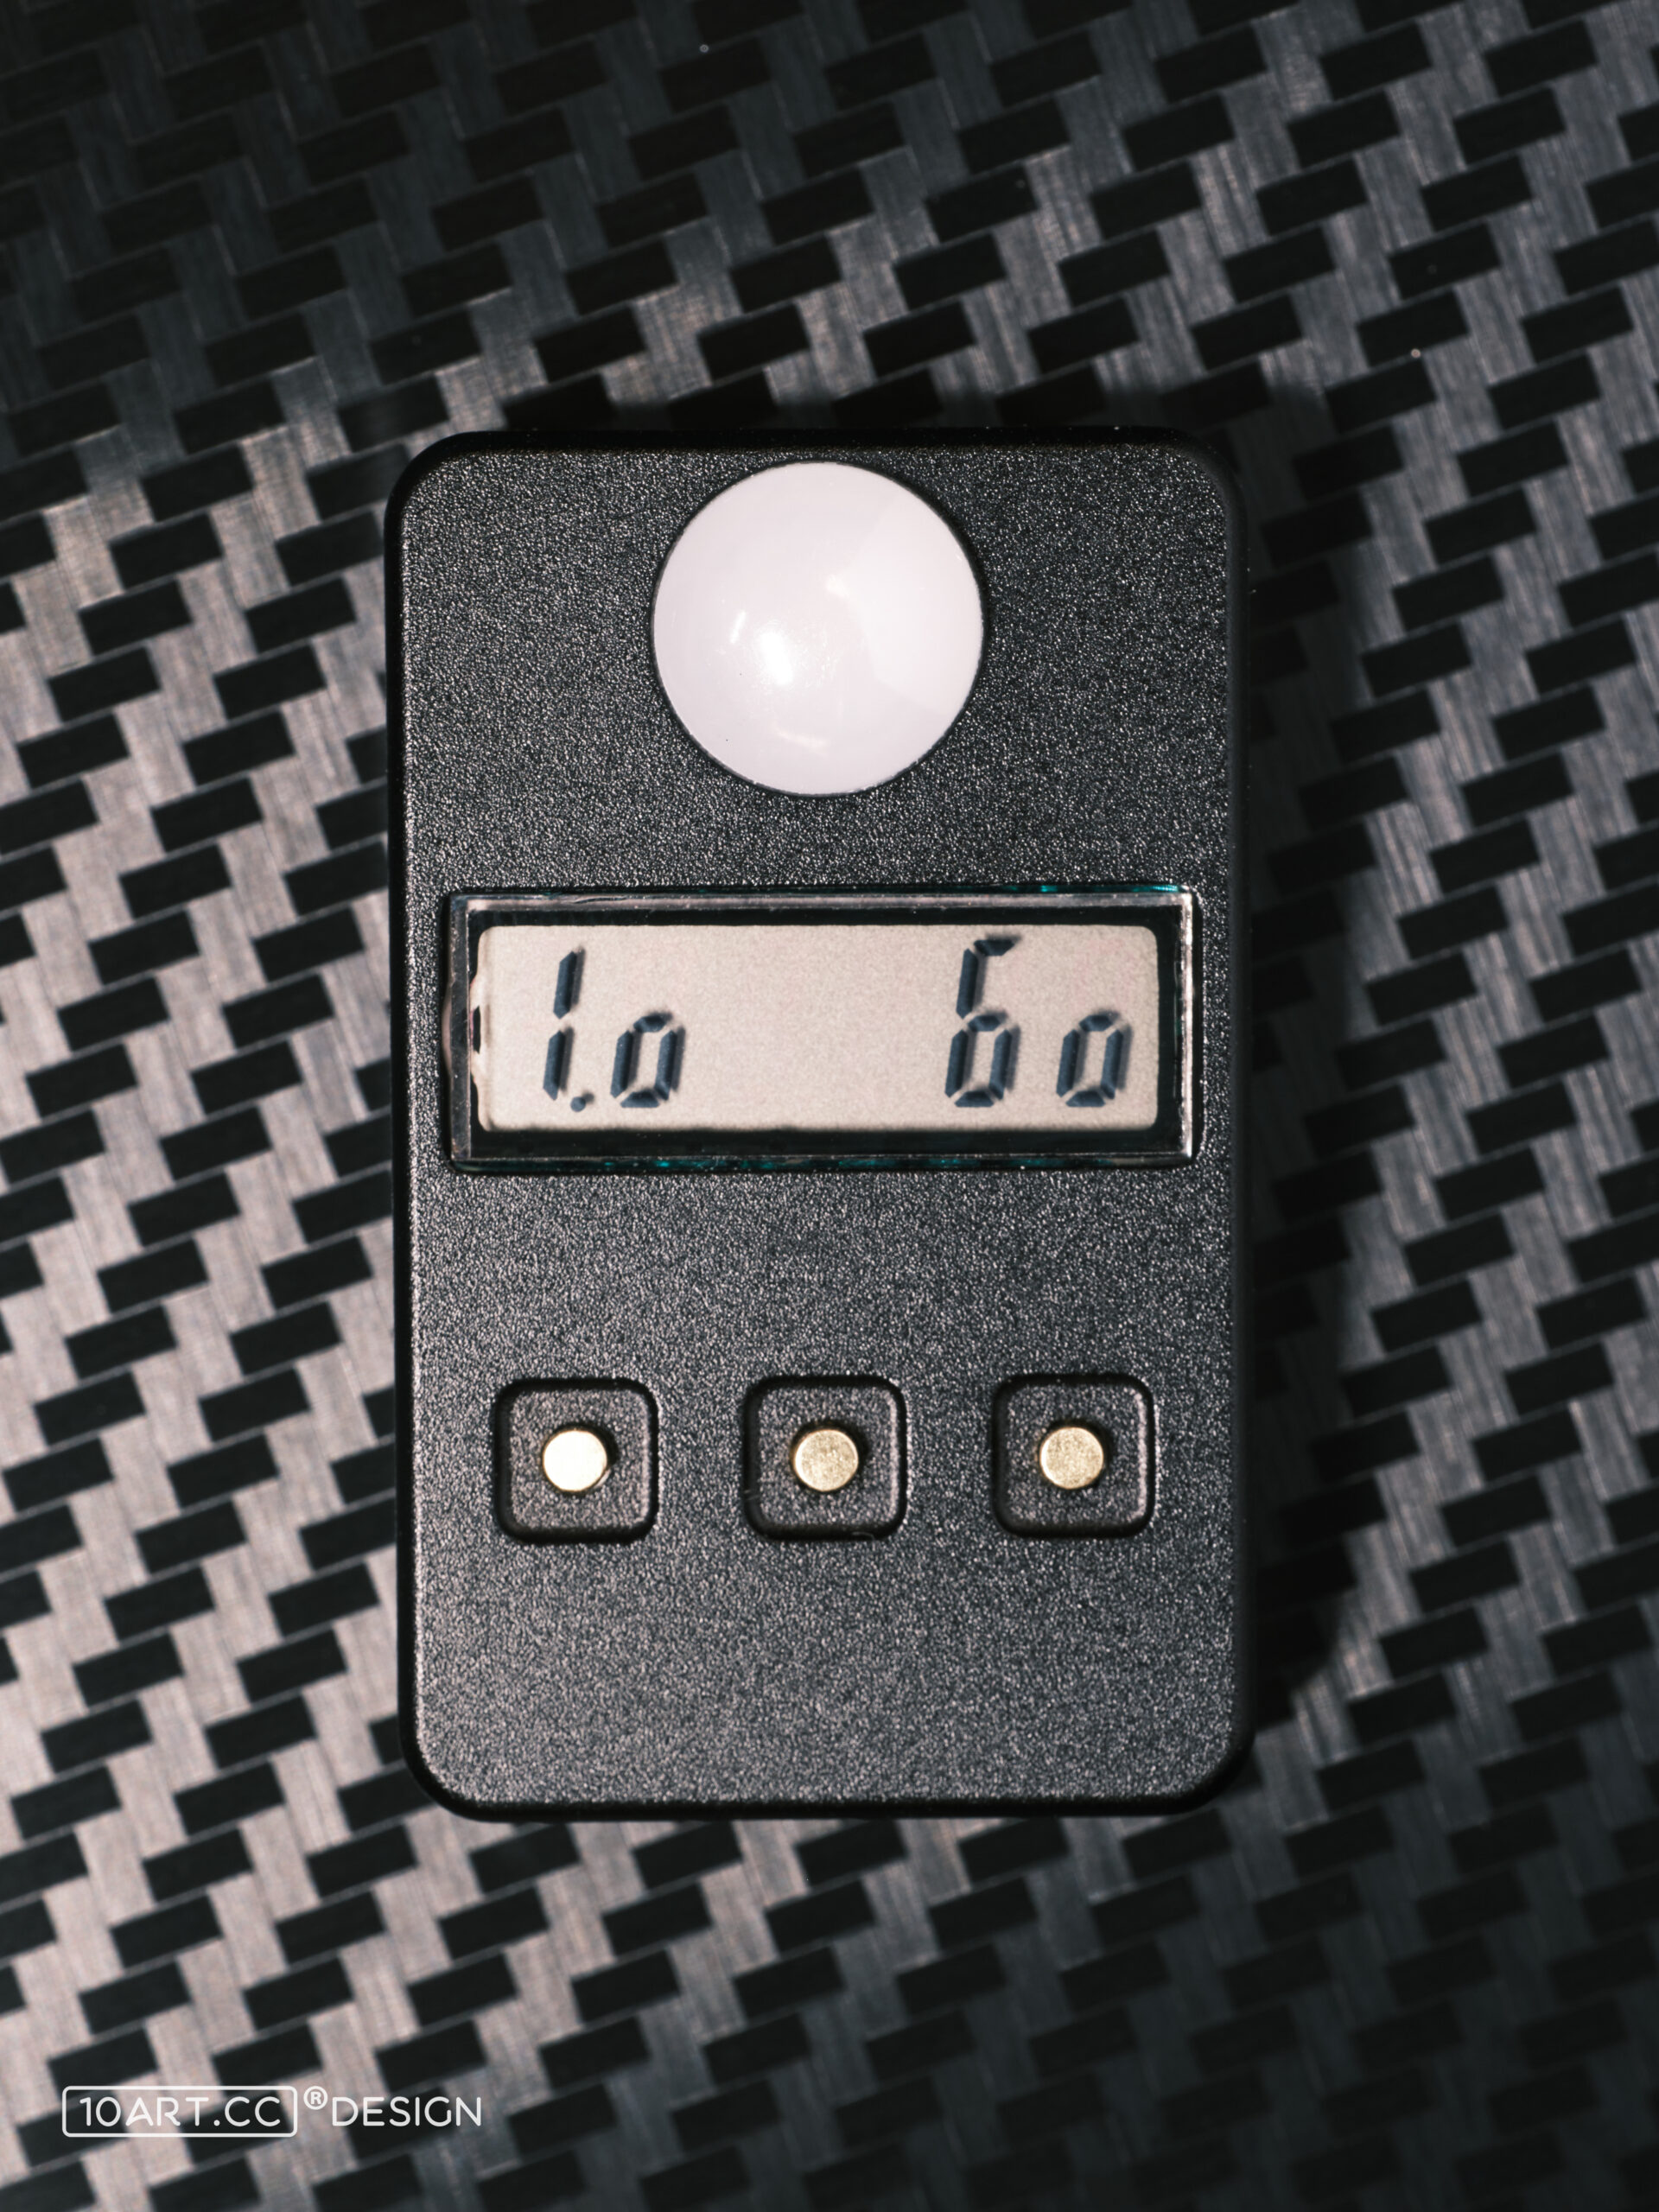 Pocket Meter Miniature Incidence Light Meter